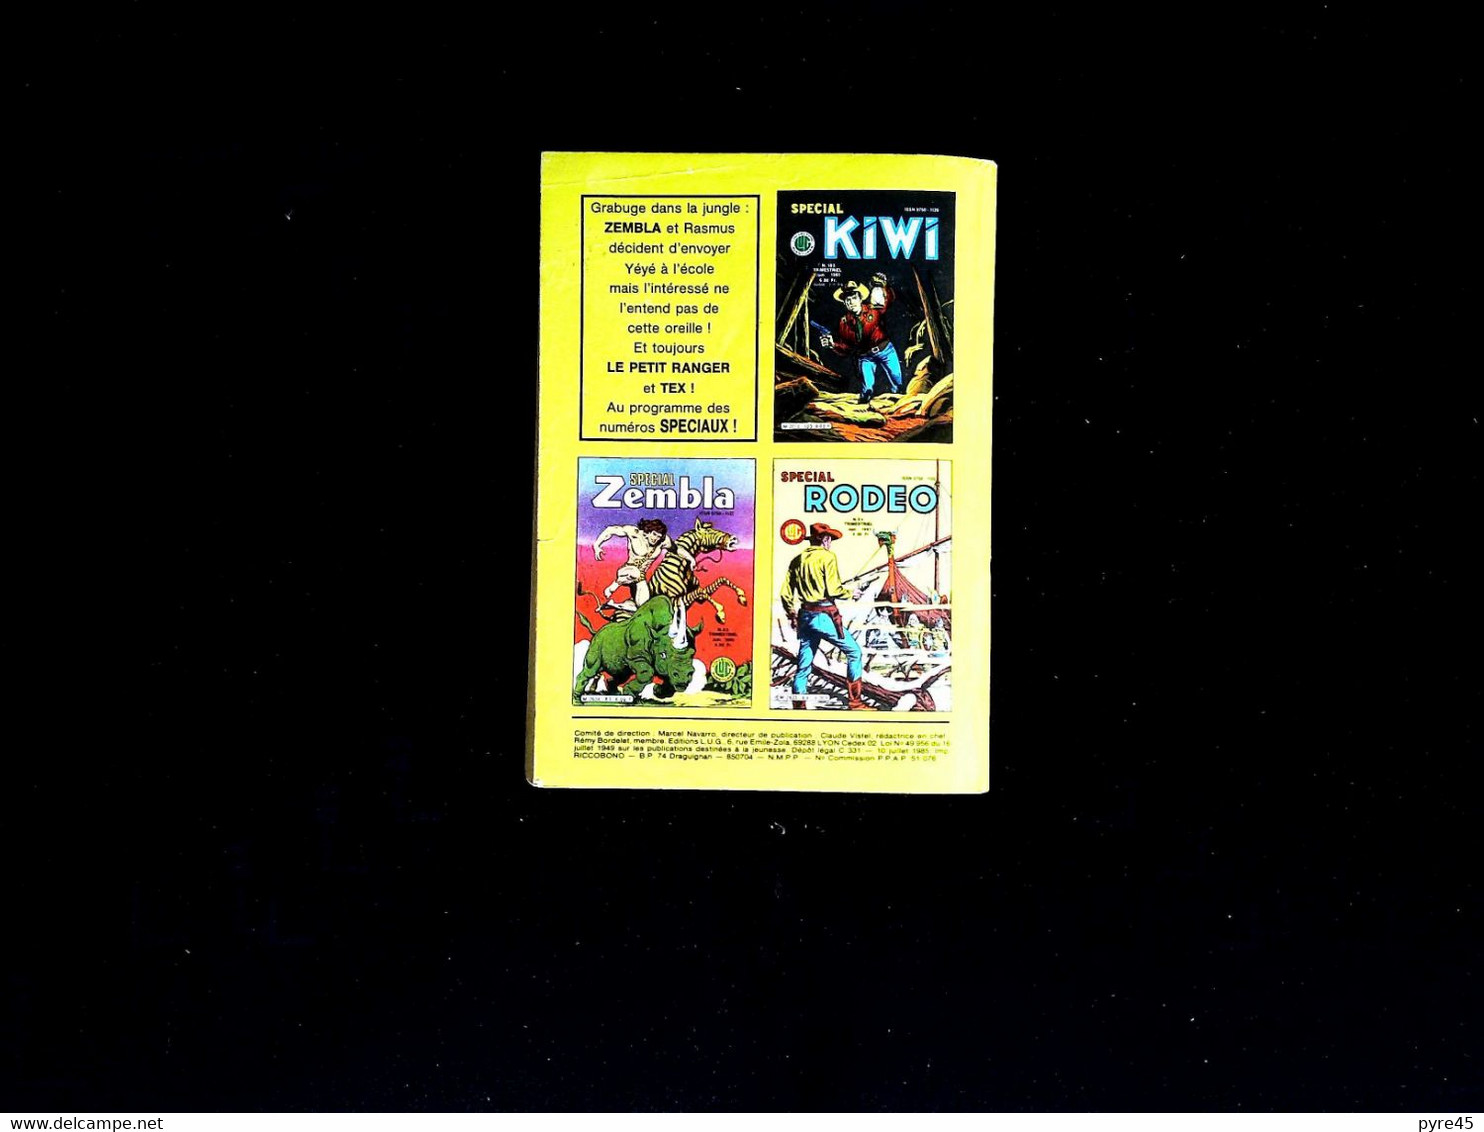 Mensuel Petit Format " Kiwi " N° 363, 1985 - Kiwi